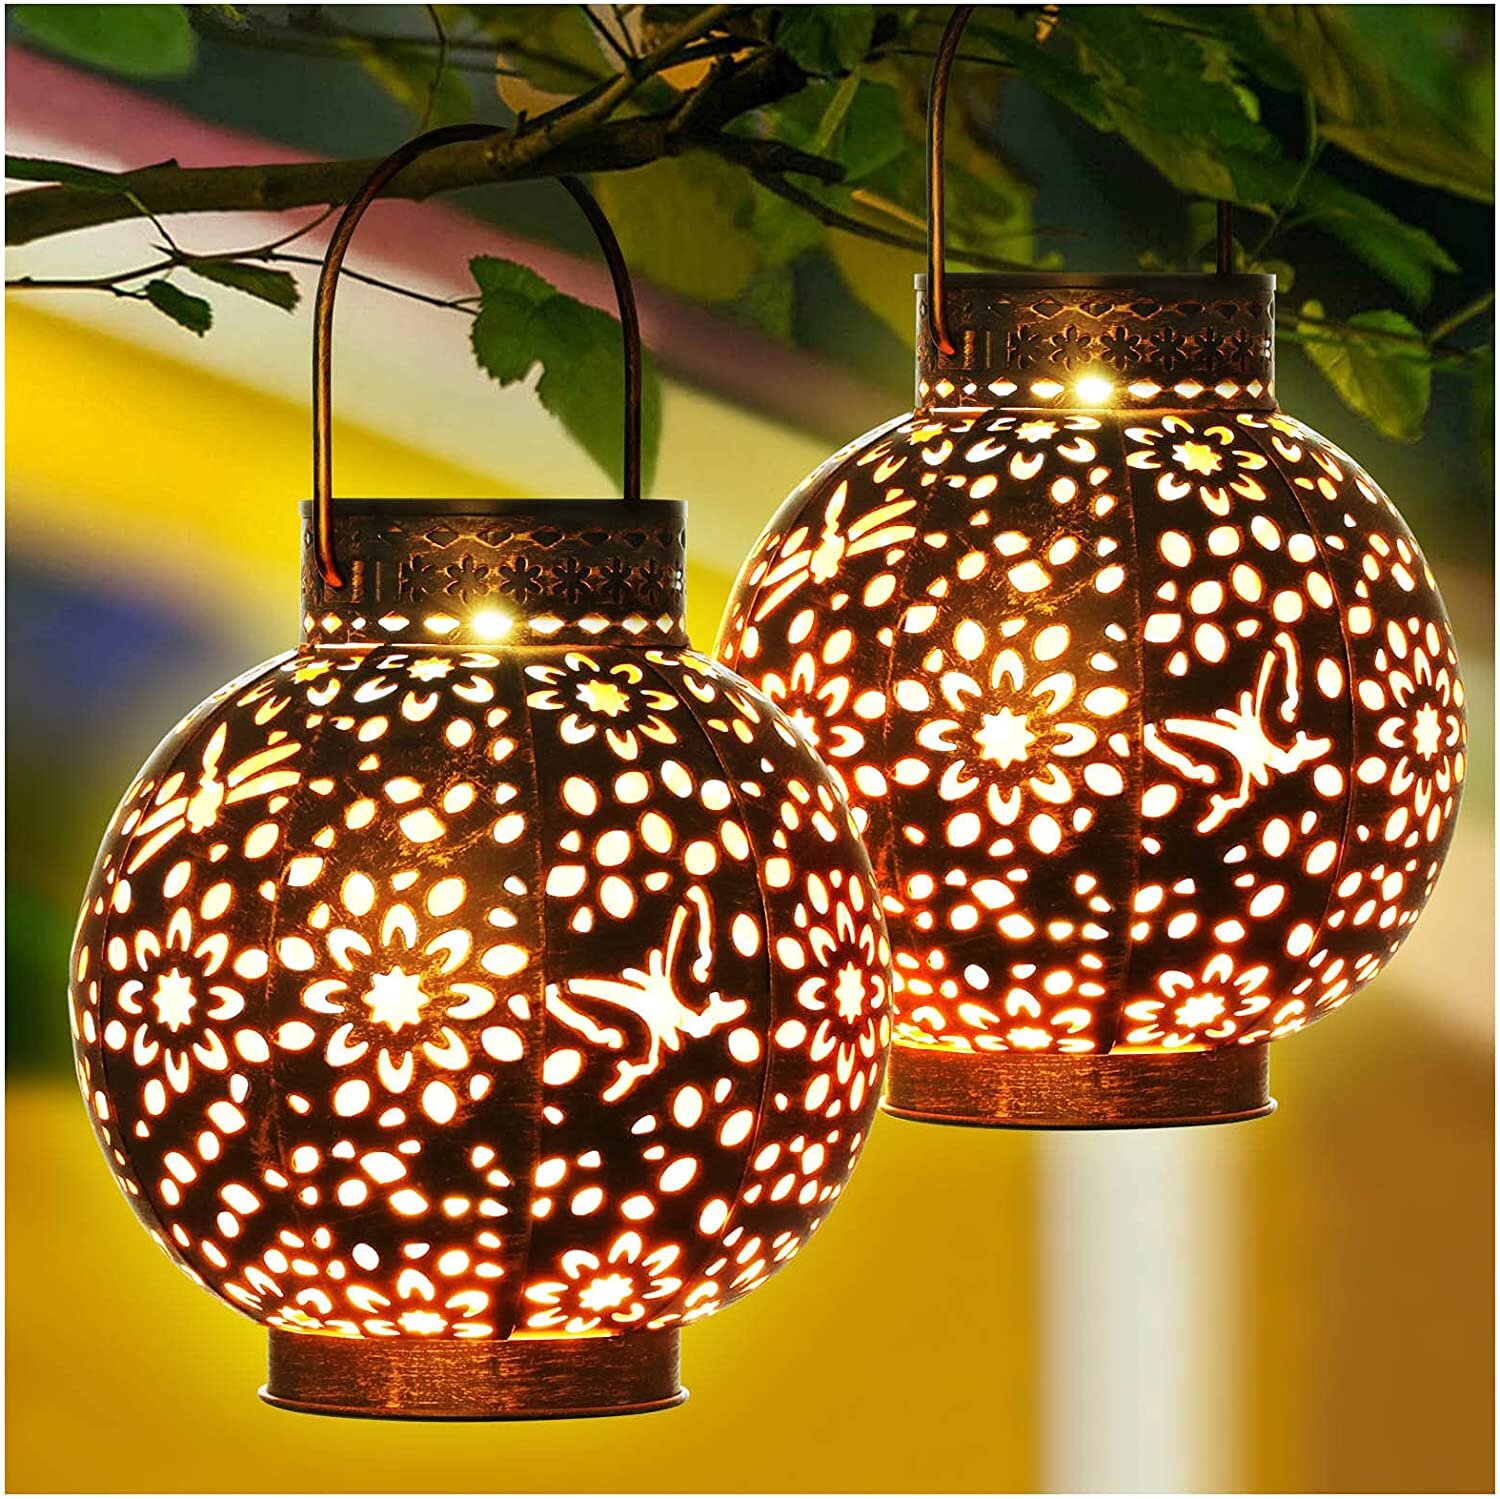 Decorative Solar Light Lantern Lamp Outdoors Garden Yard Patio Hanging Led Decor 